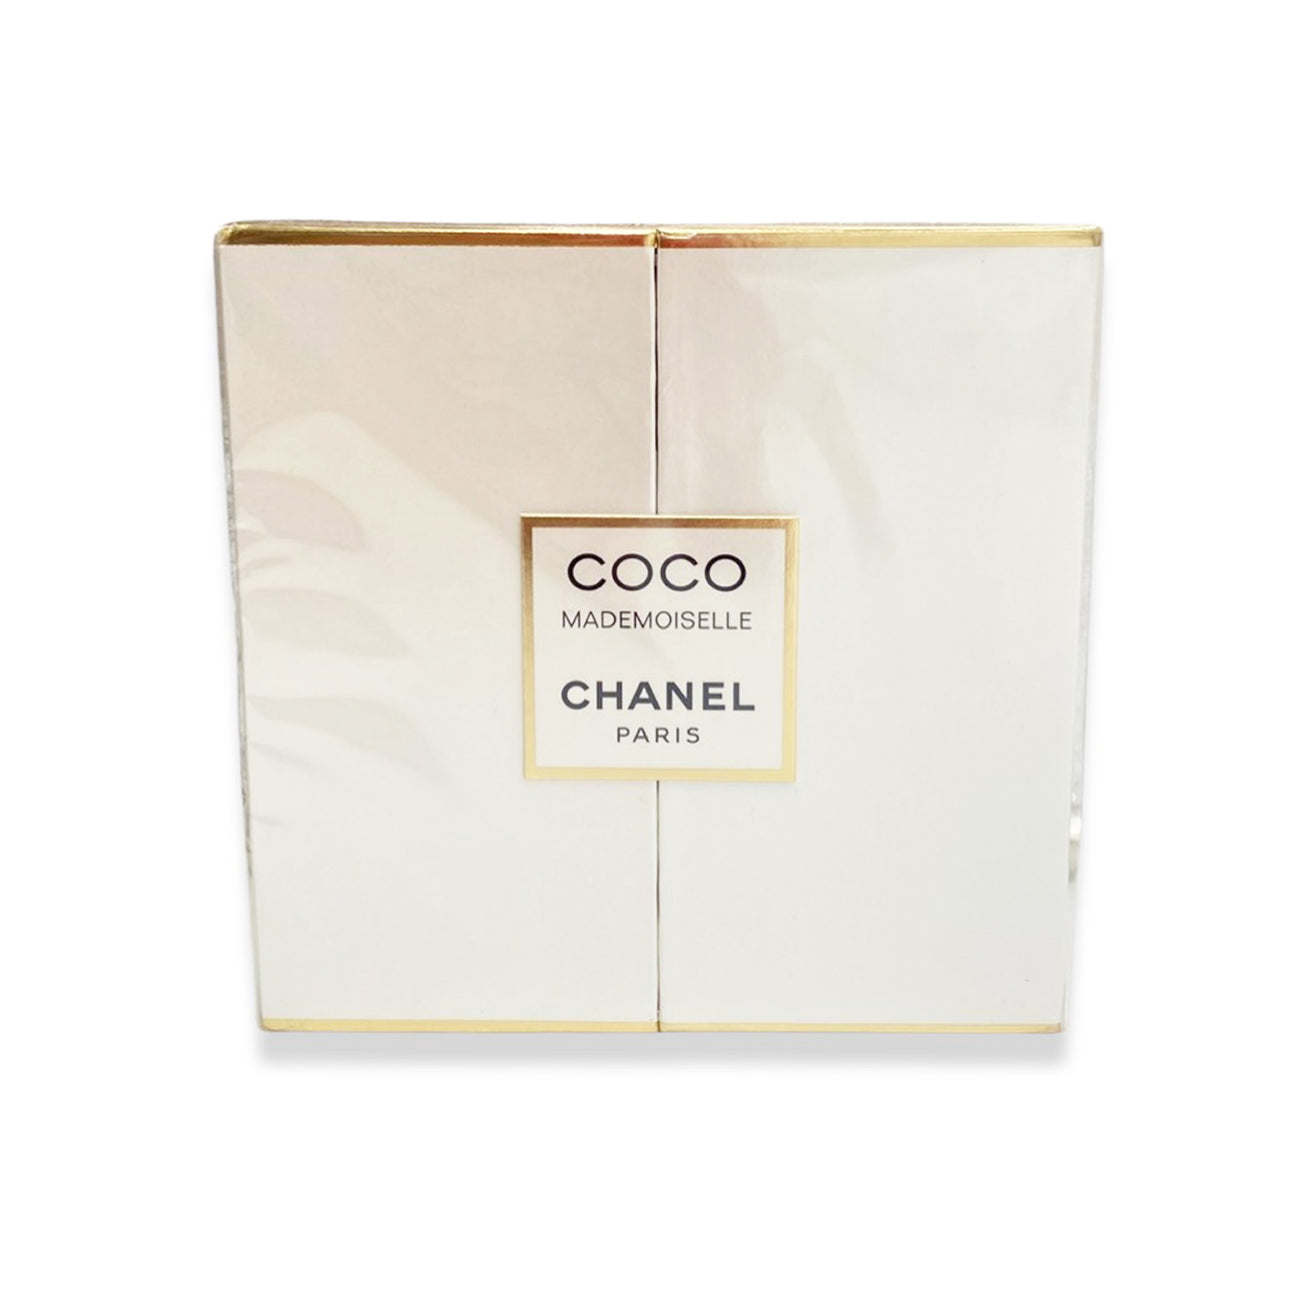 Chiết Chanel Coco Mademoiselle LEau Privee 30ml  Tiến Perfume